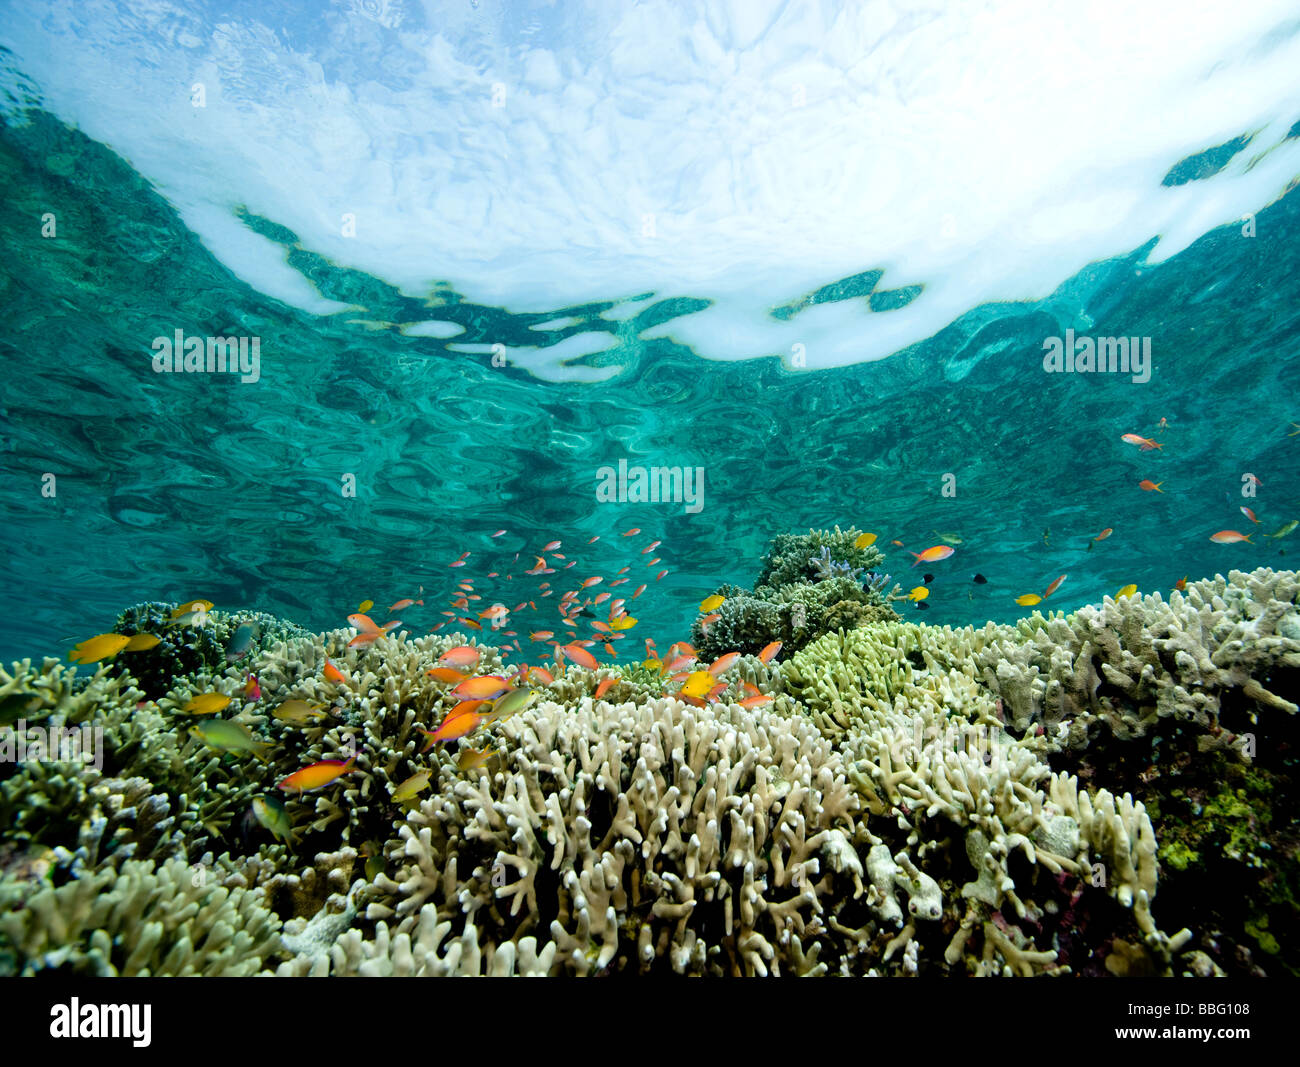 Coral reef scene. Stock Photo